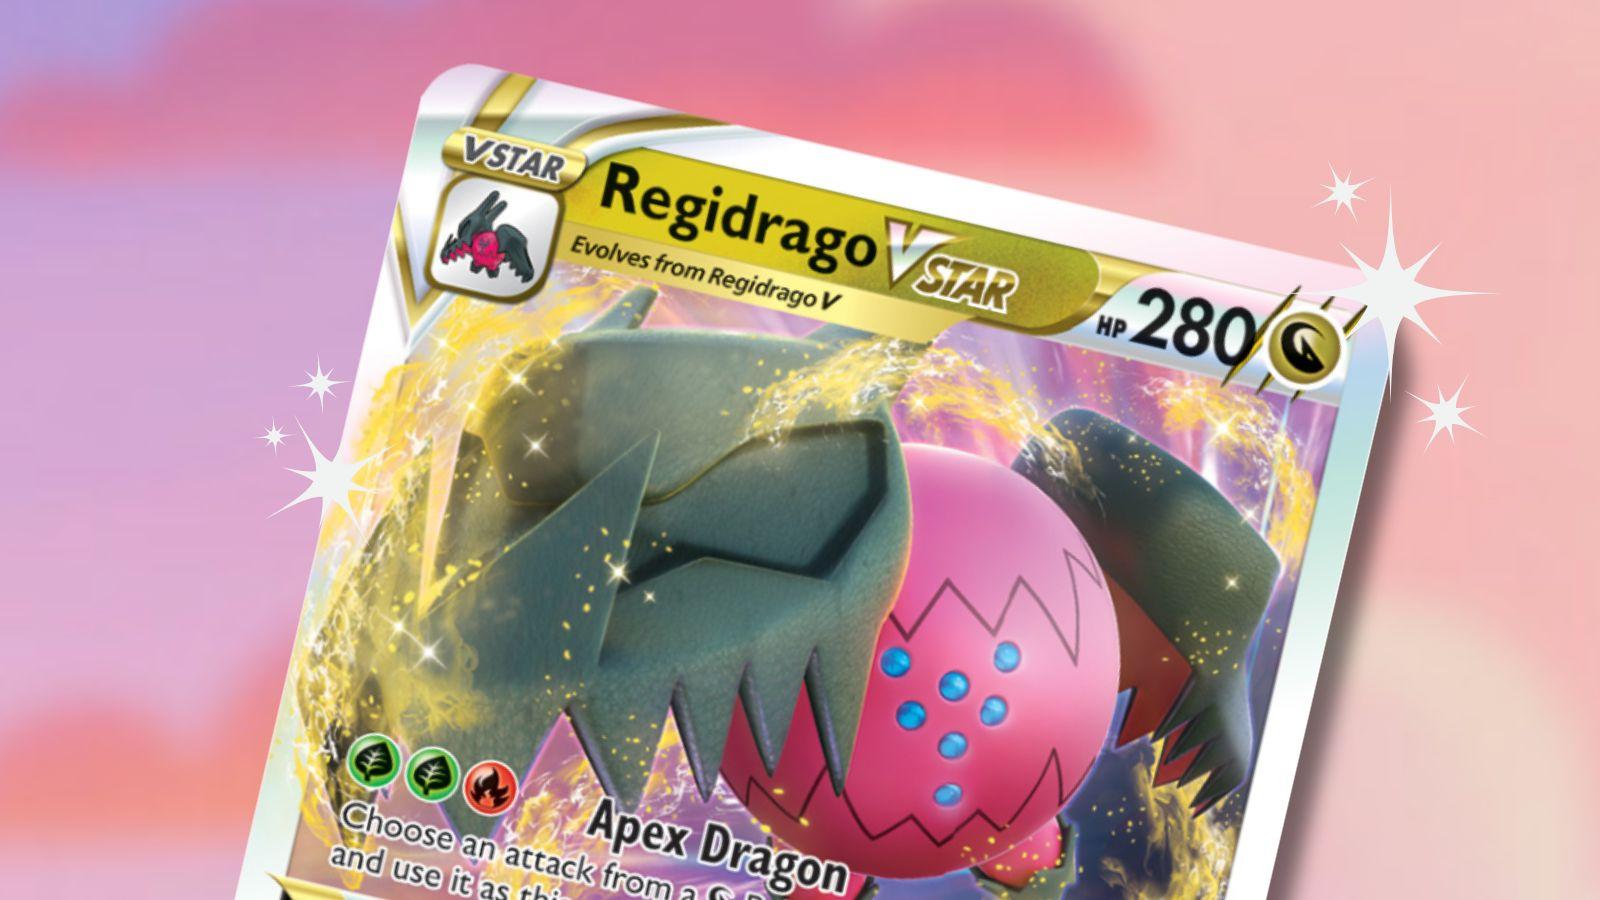 Regidrago Pokemon card with sunset background.